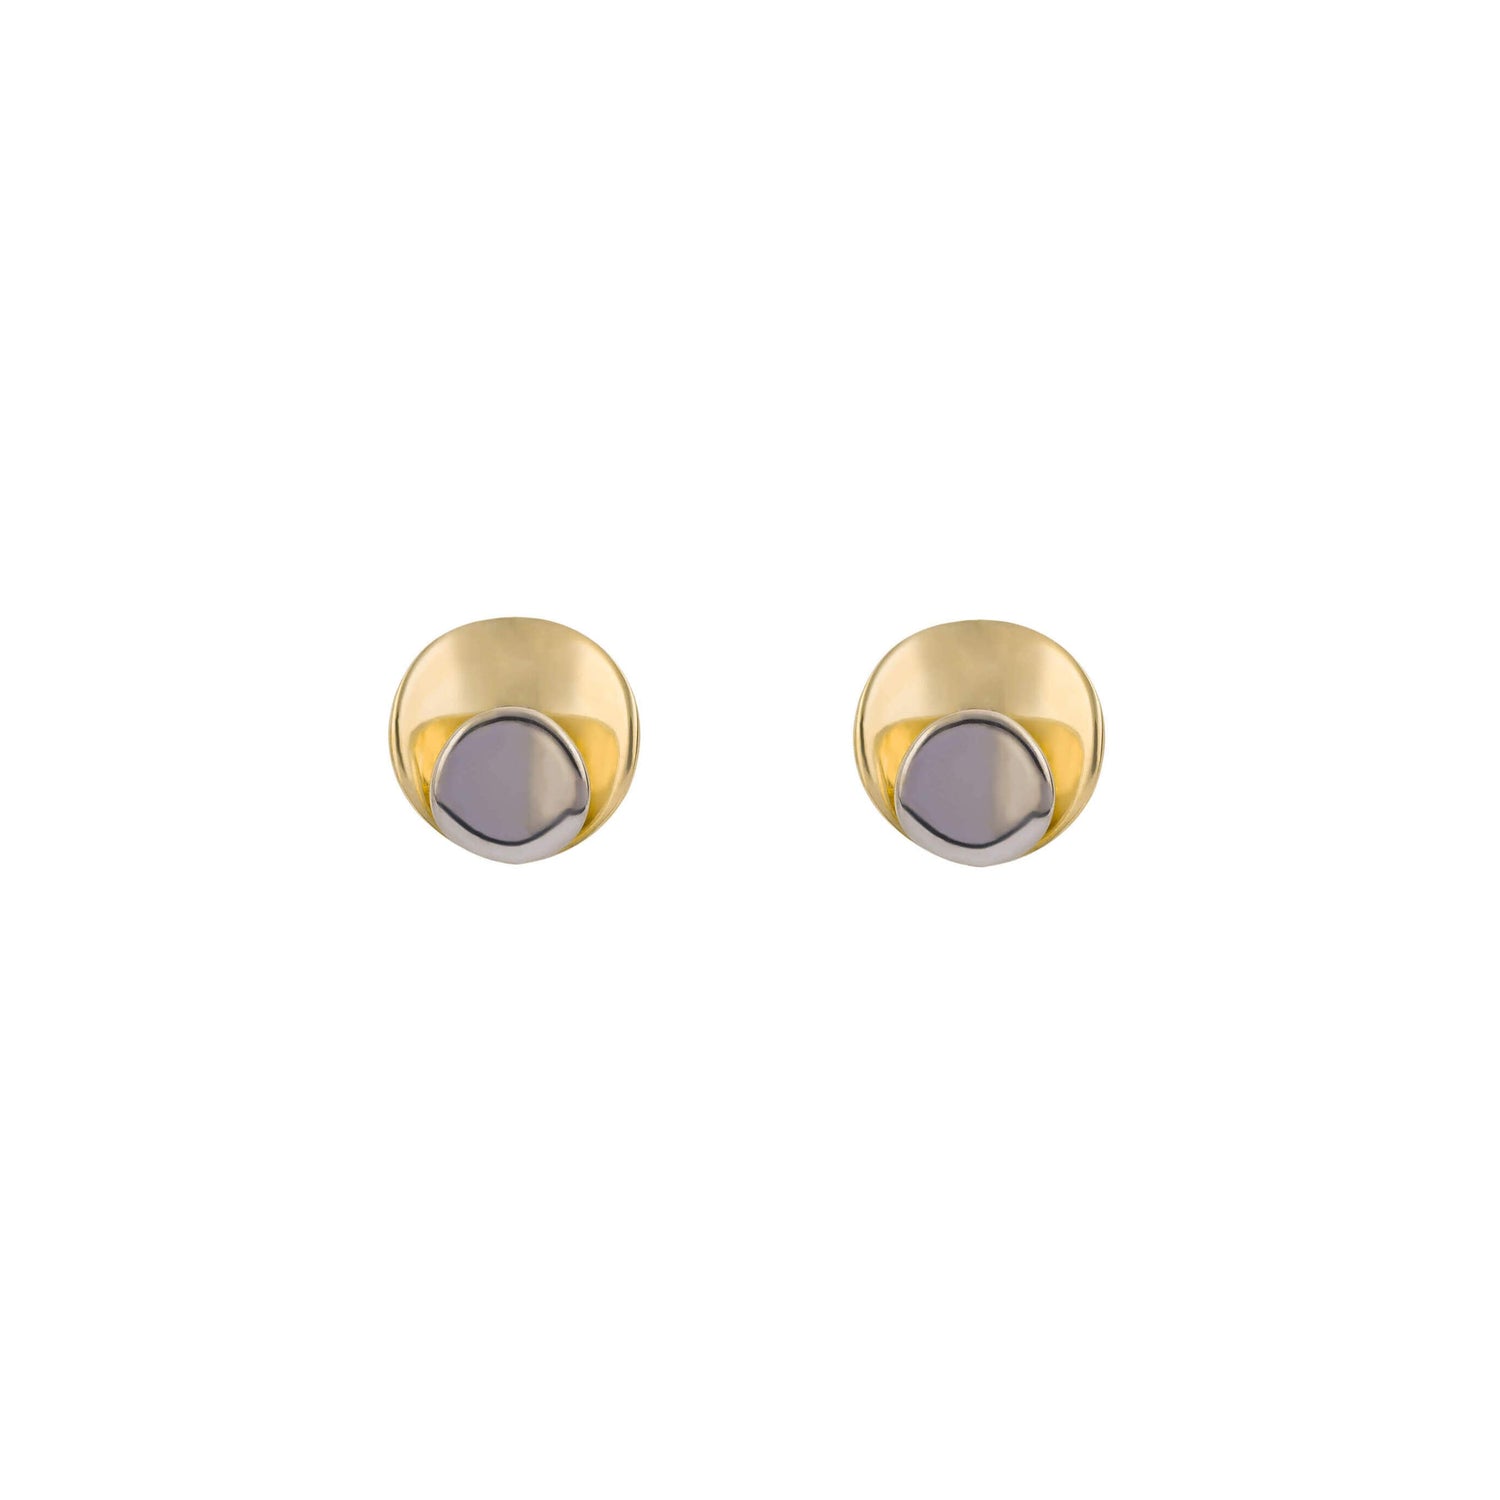 Two Tone Stud Earrings in 9ct Gold - Robert Anthony Jewellers, Edinburgh